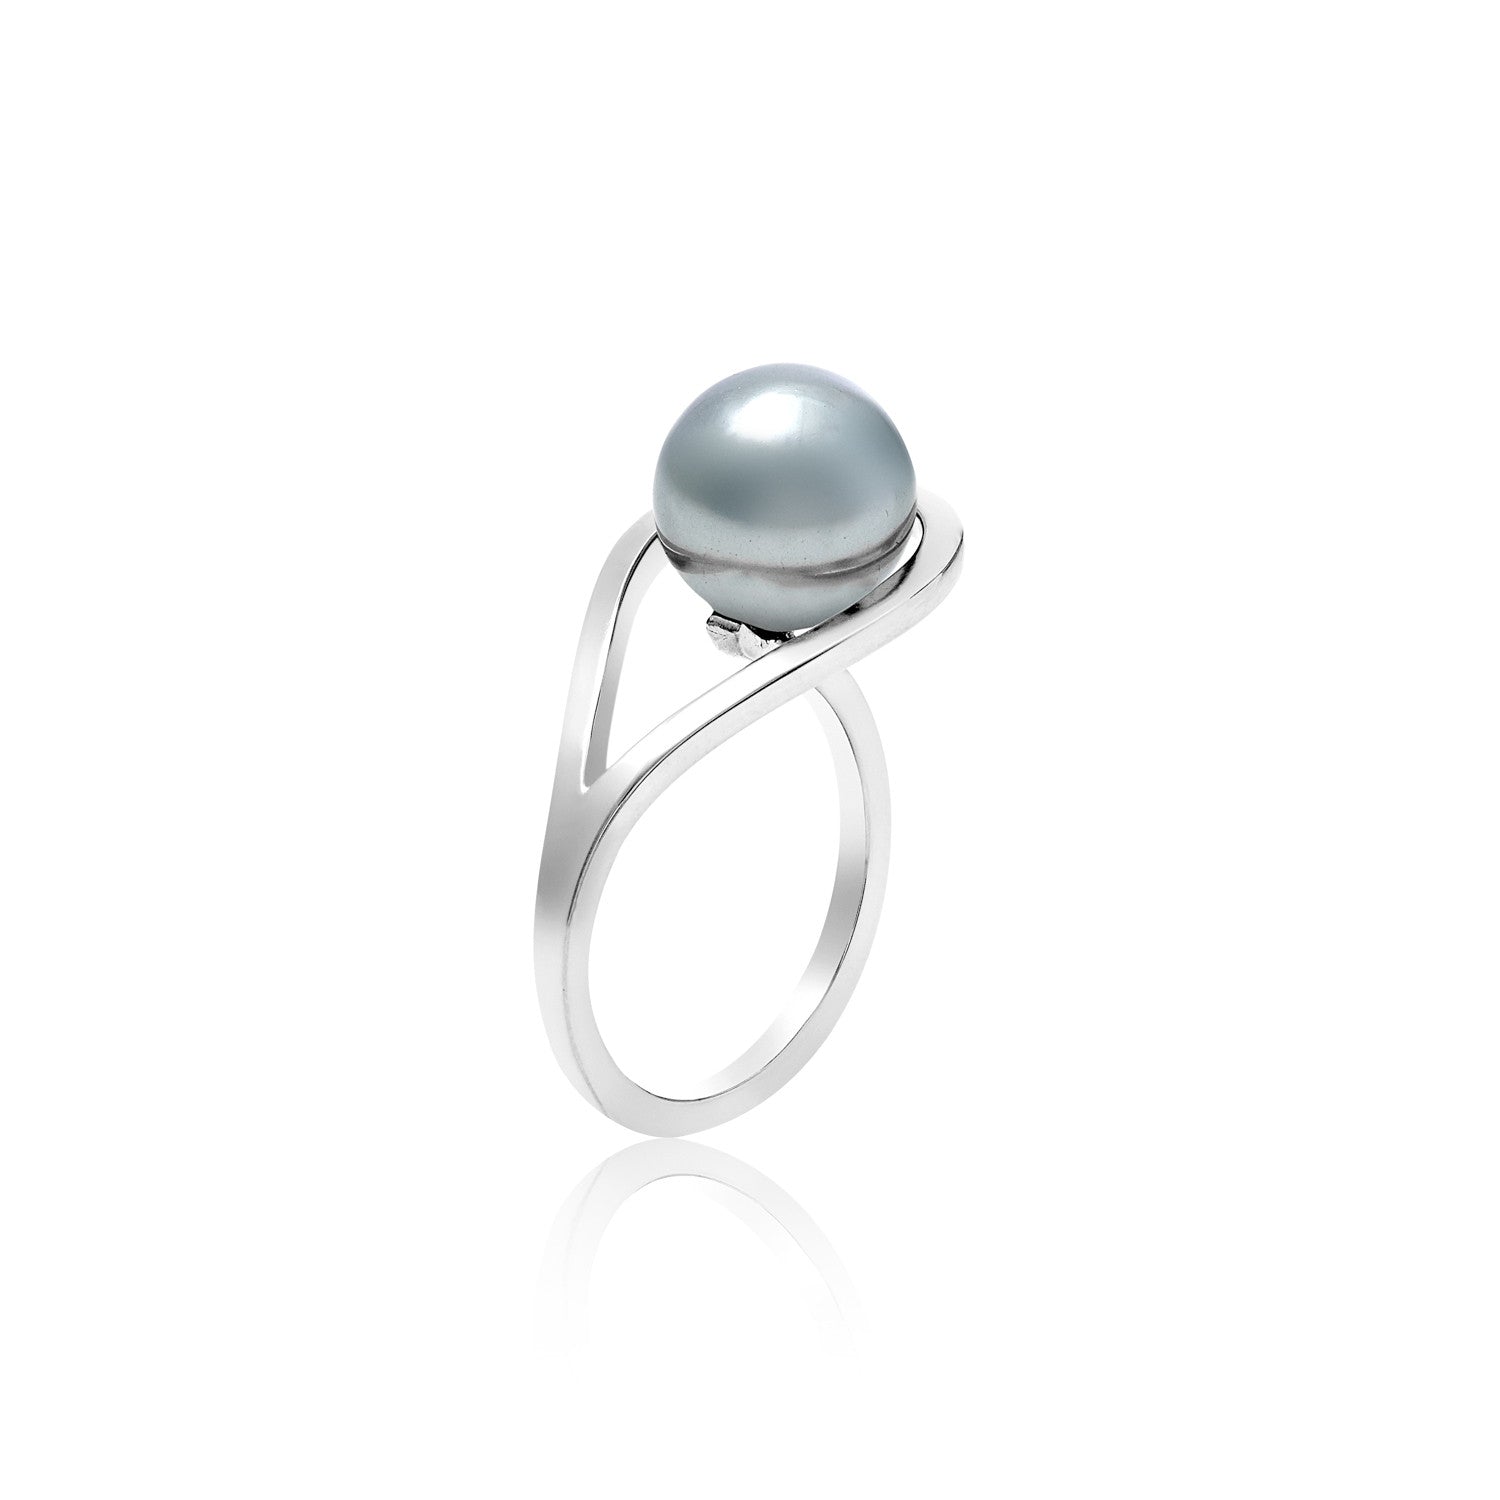 Silver Ring with Pearl, geometric, unique British design